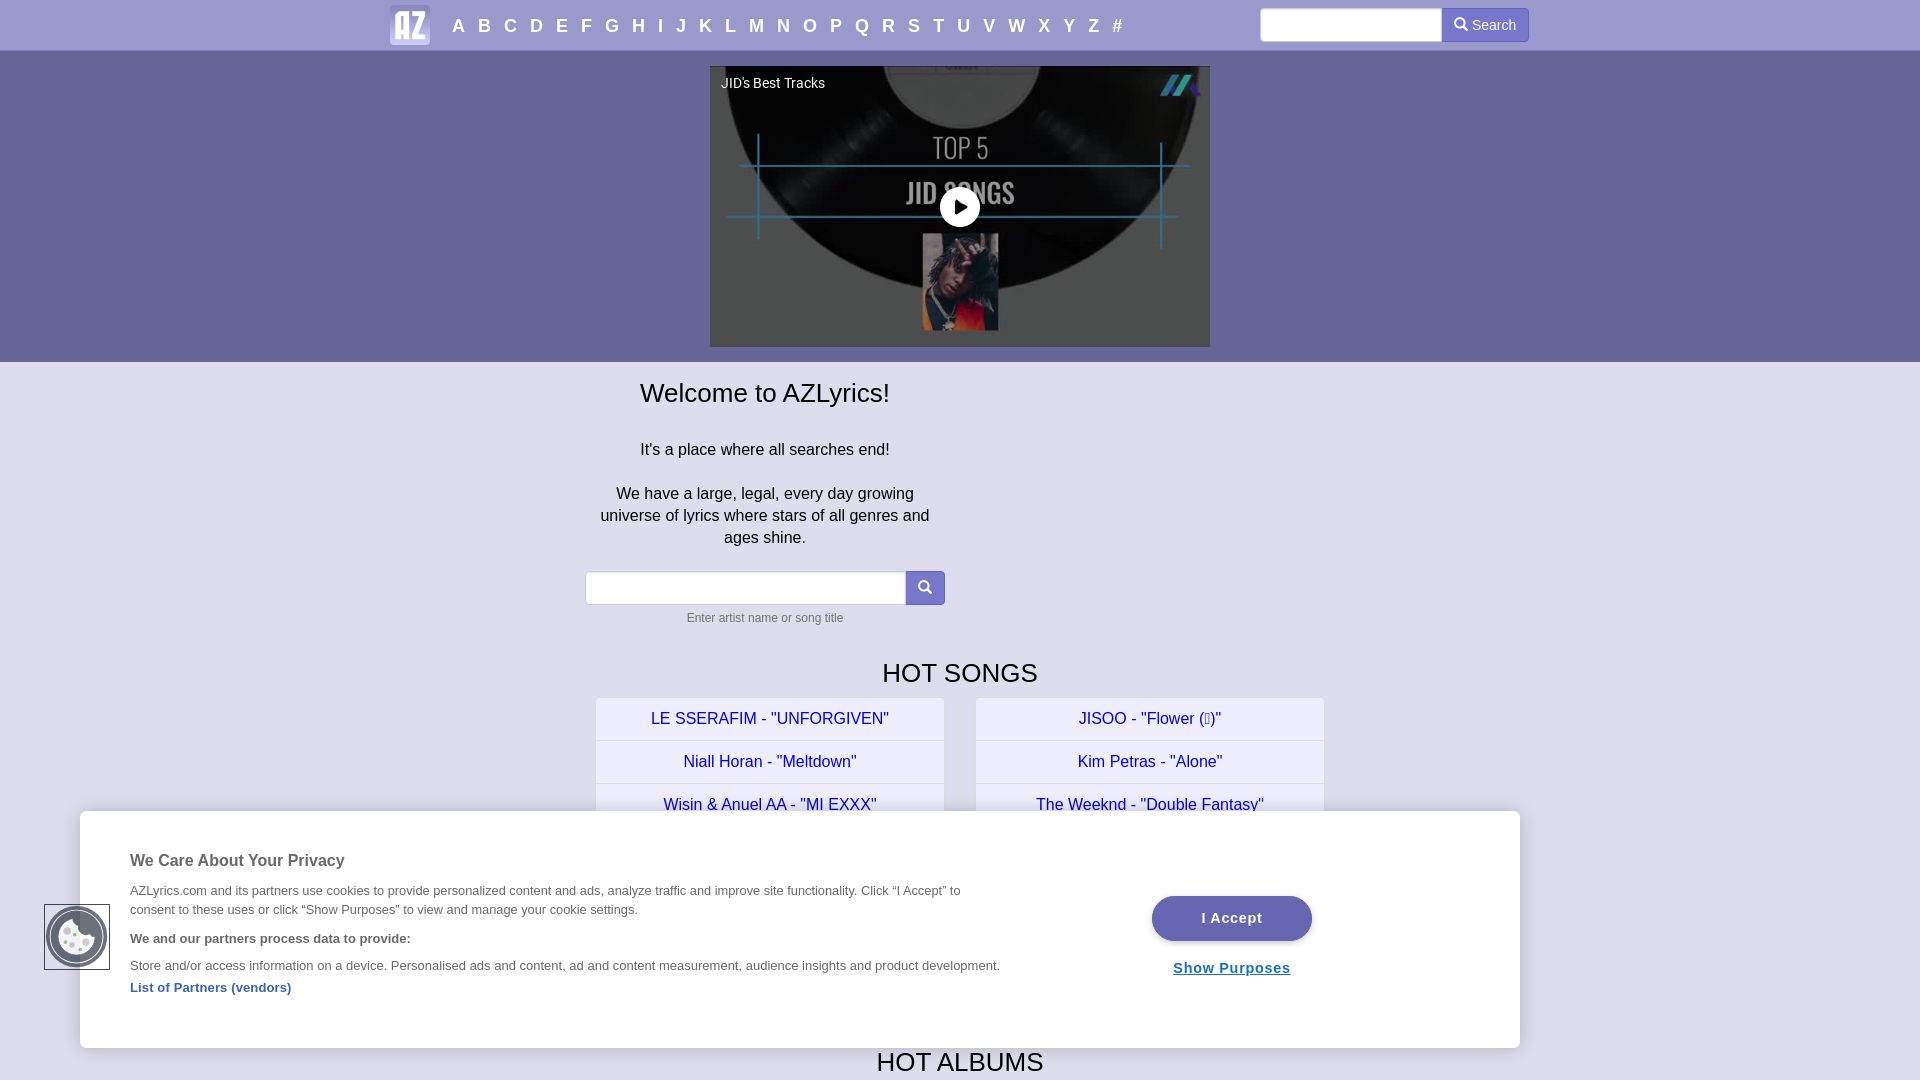 Website status azlyrics.com is   ONLINE